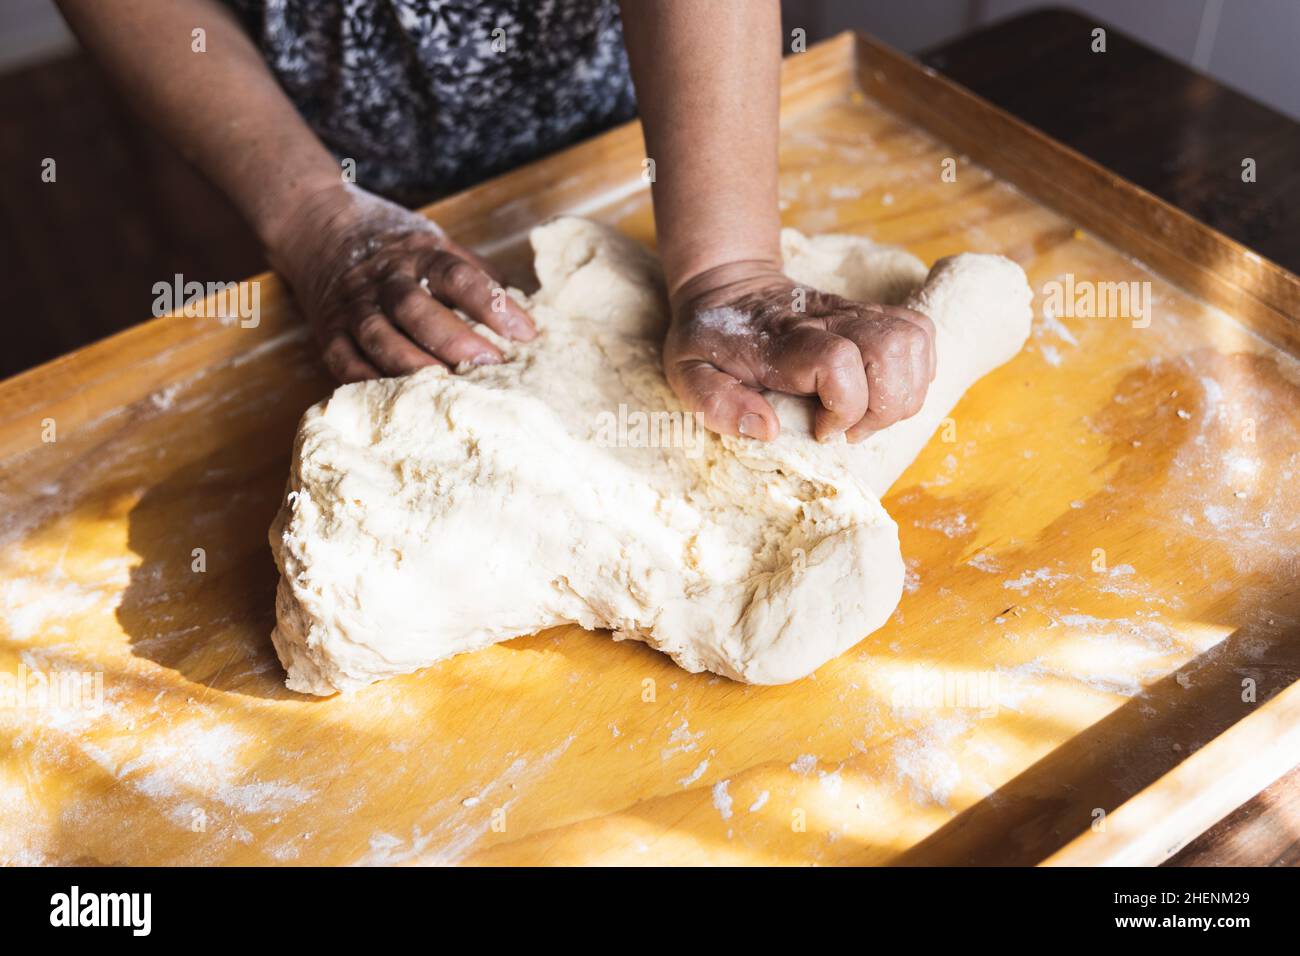 Old woman's hands kneading bread dough. Empanadas. Wooden table. Stock Photo